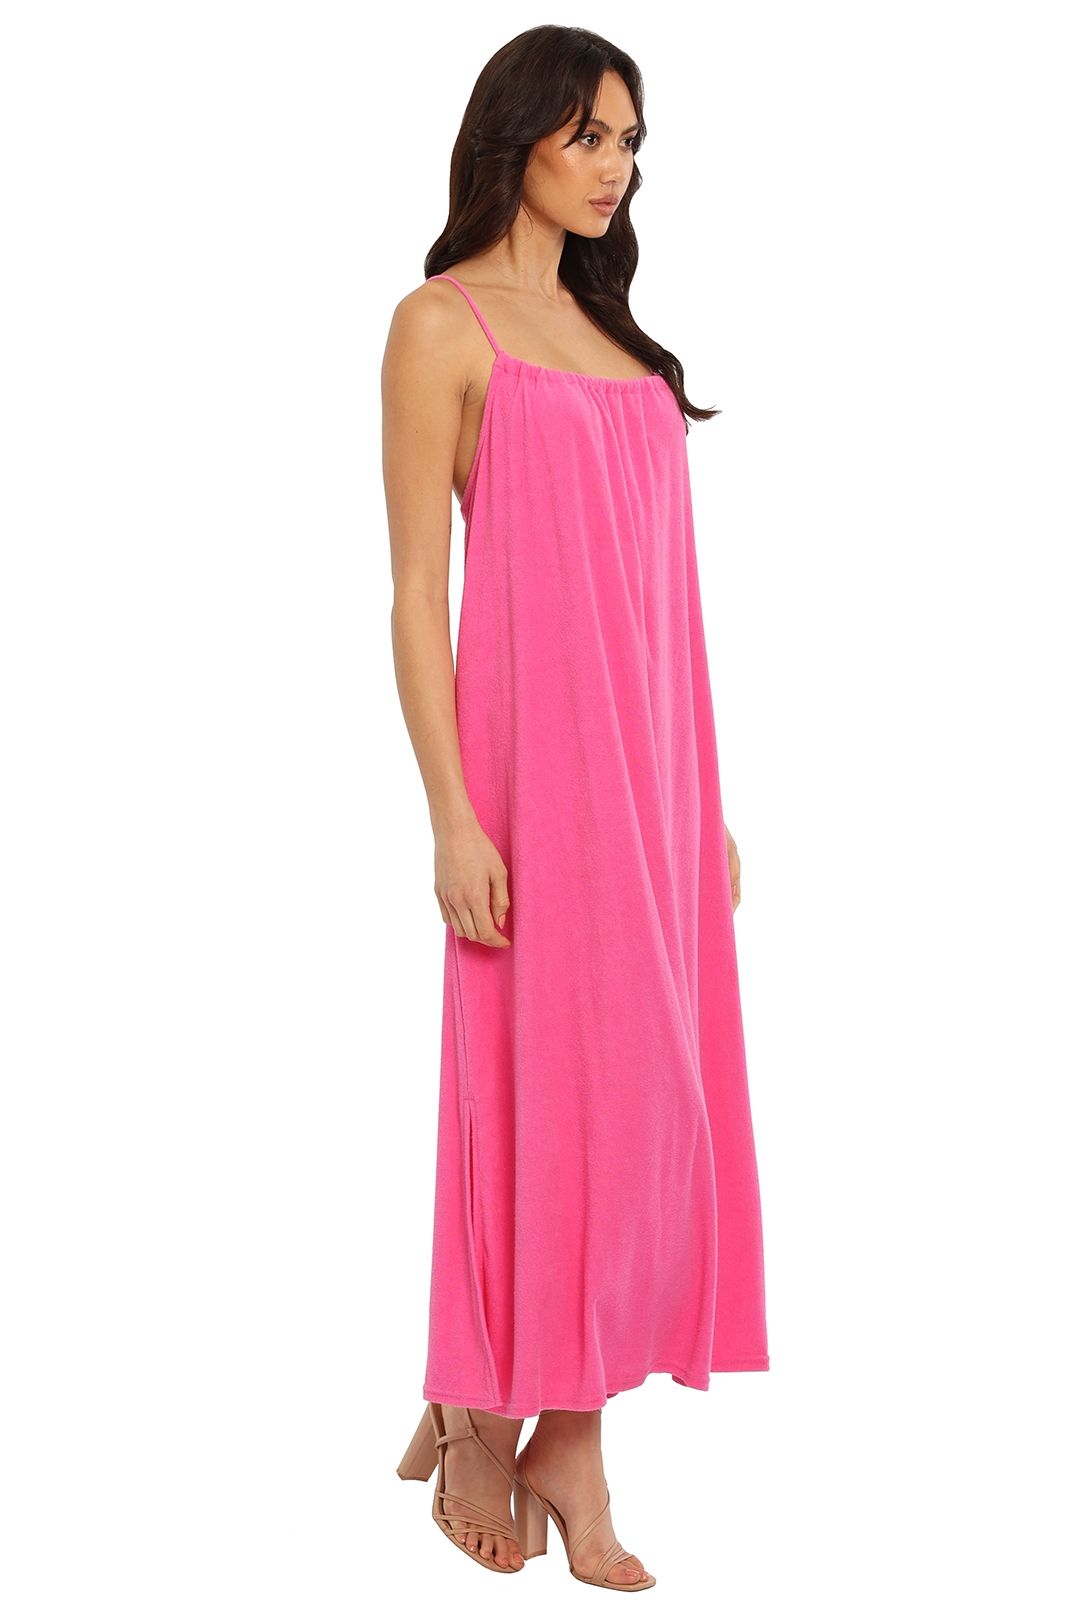 Blanca Sisco Dress Pink Sleeveless